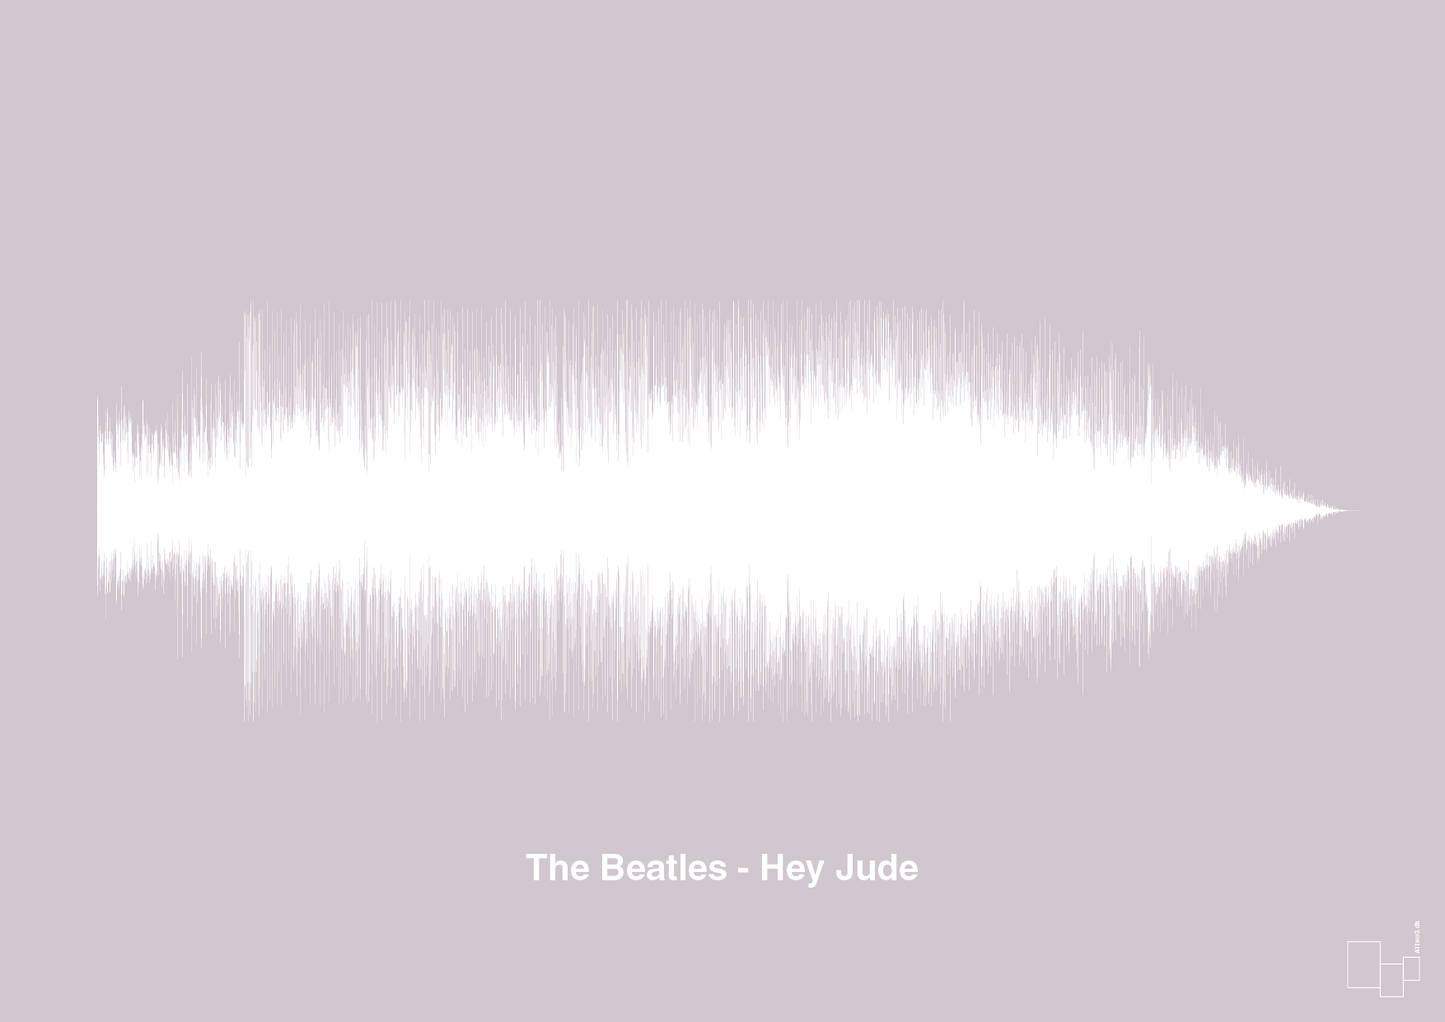 the beatles - hey jude - Plakat med Musik i Dusty Lilac